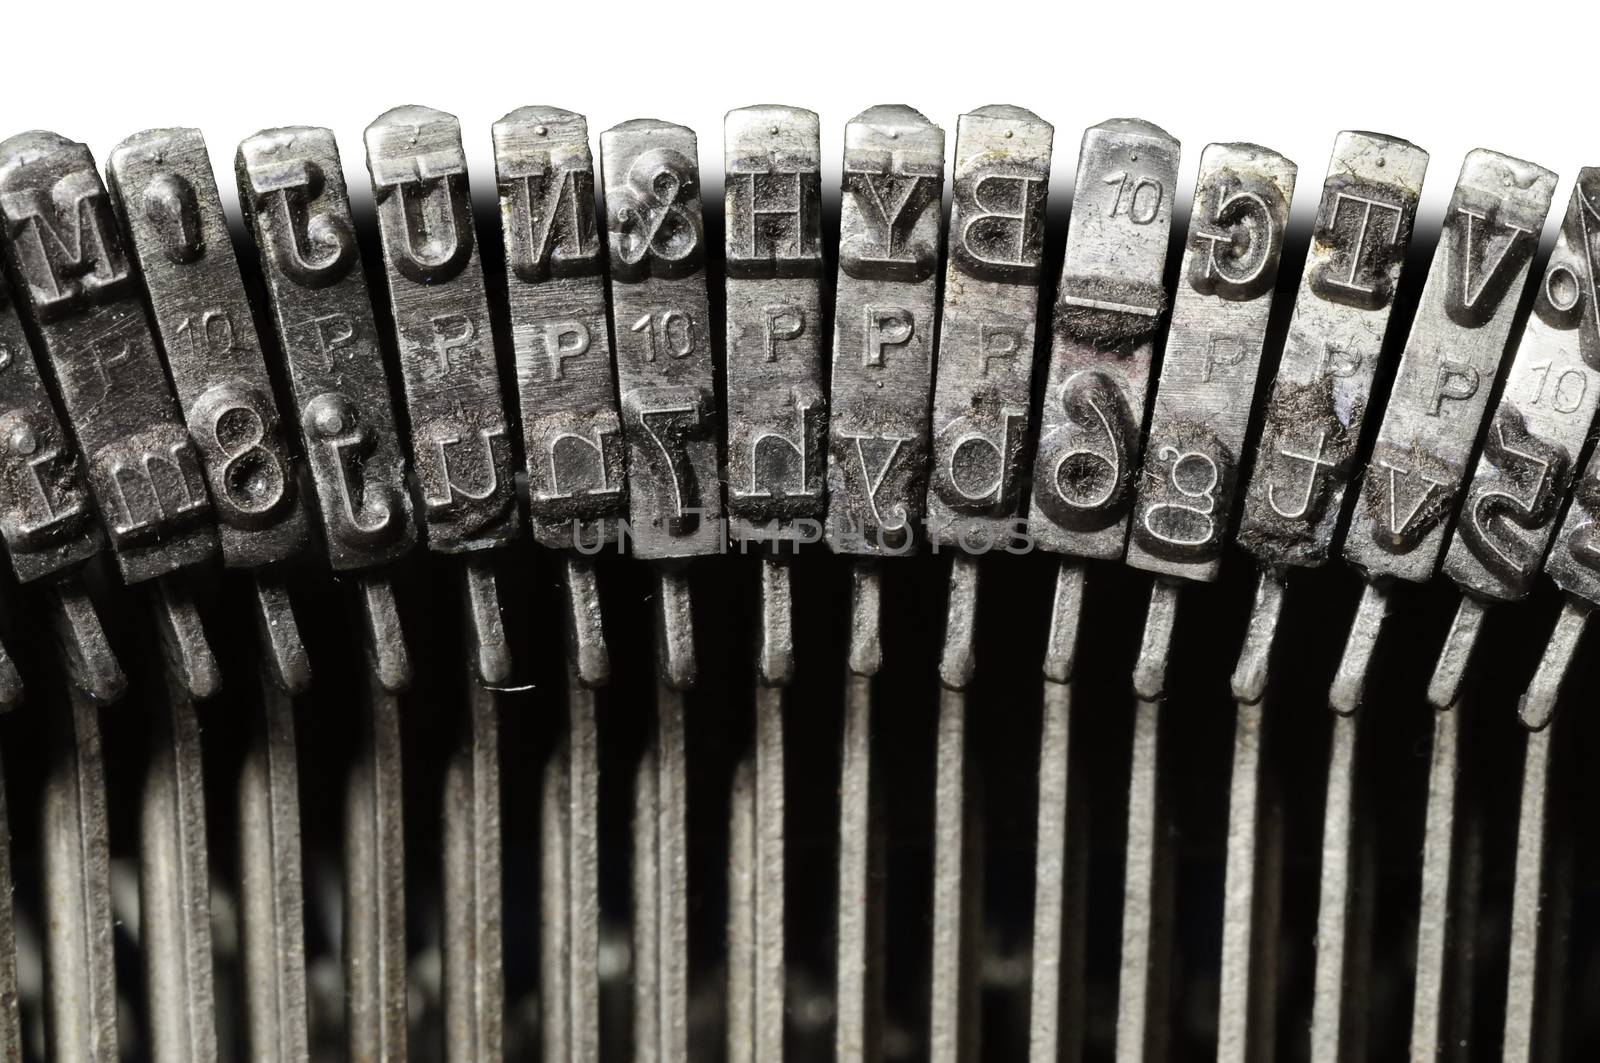 Close-up of vintage typewriter letter &  symbol keys by Balefire9